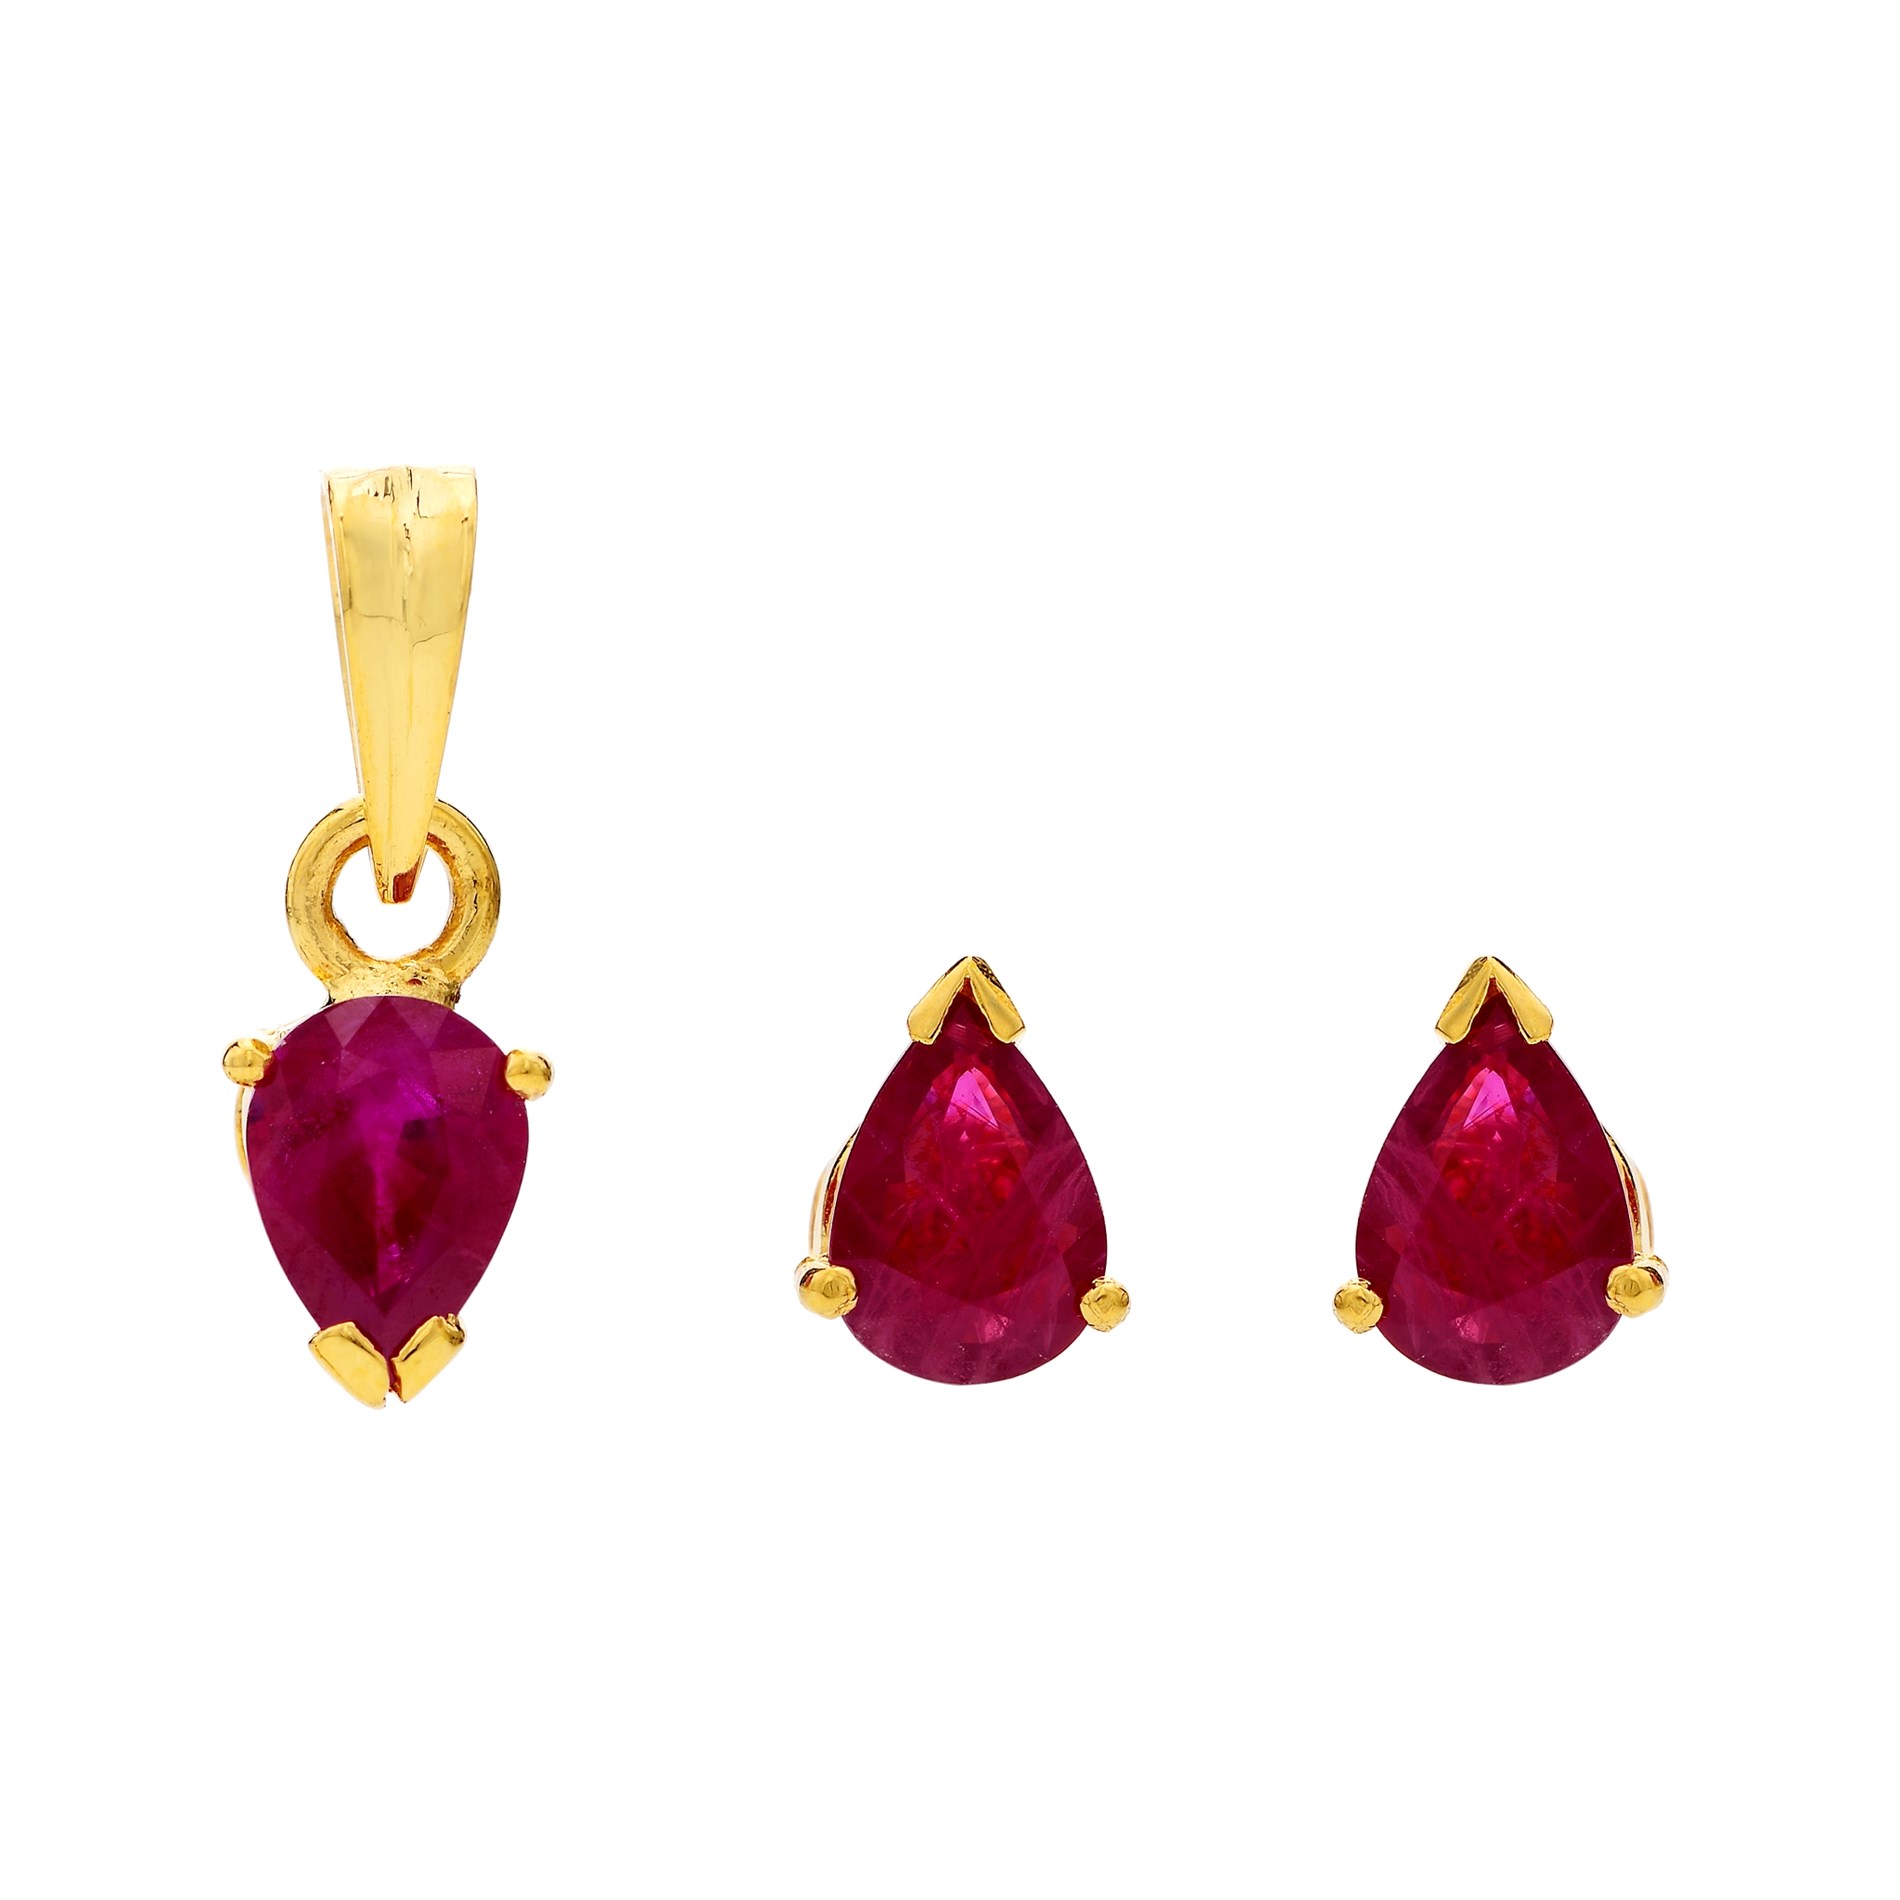 Buy Ruby Pear Shaped Stud Earrings & Pendant online